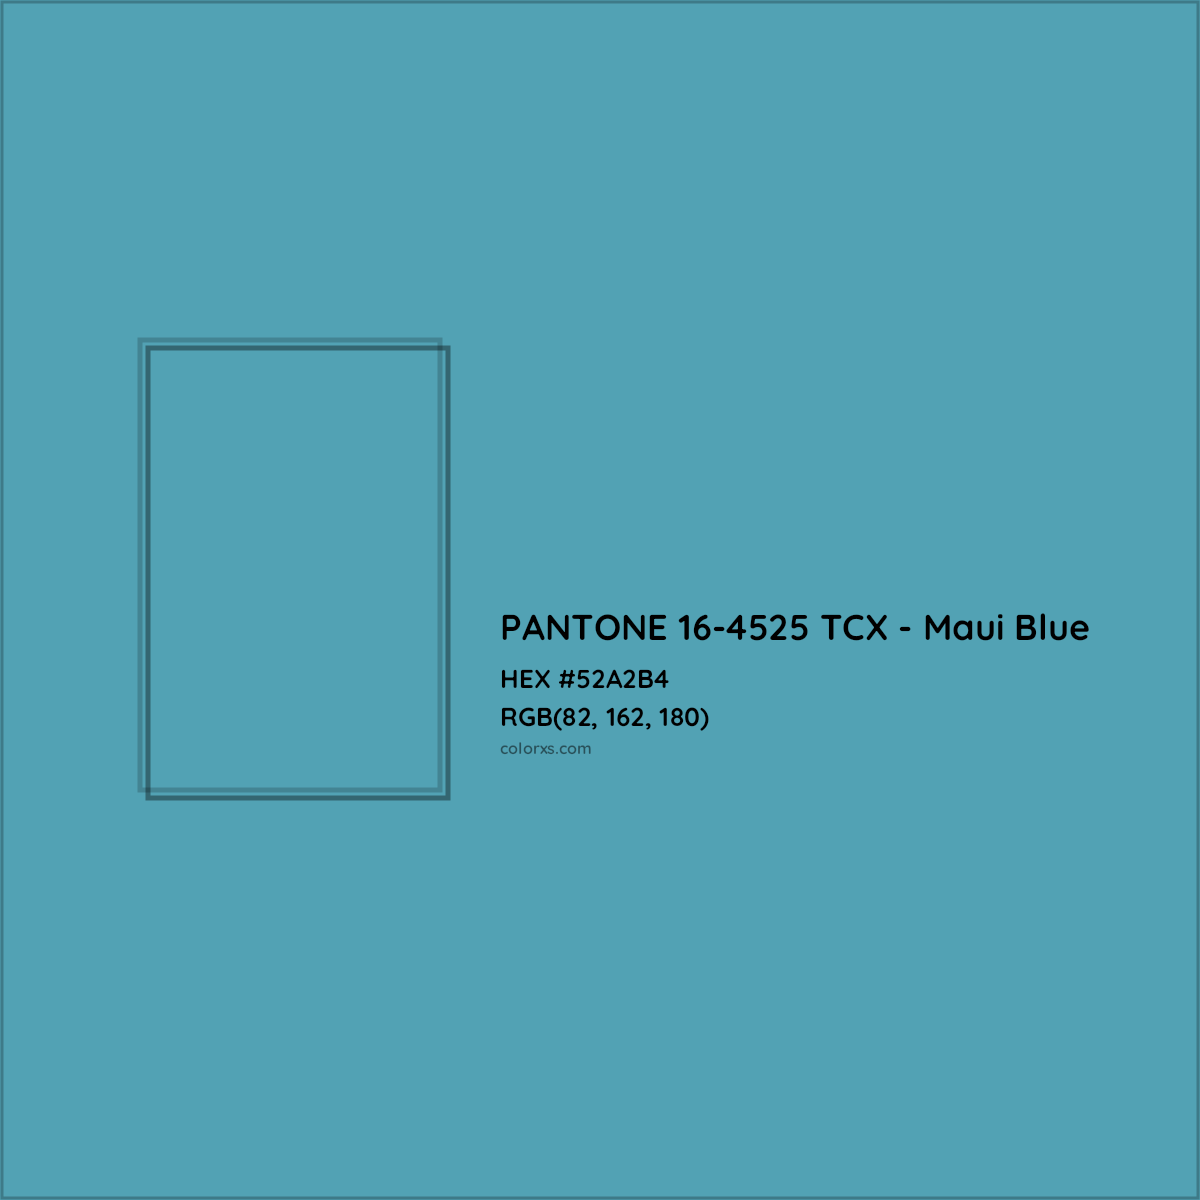 HEX #52A2B4 PANTONE 16-4525 TCX - Maui Blue CMS Pantone TCX - Color Code